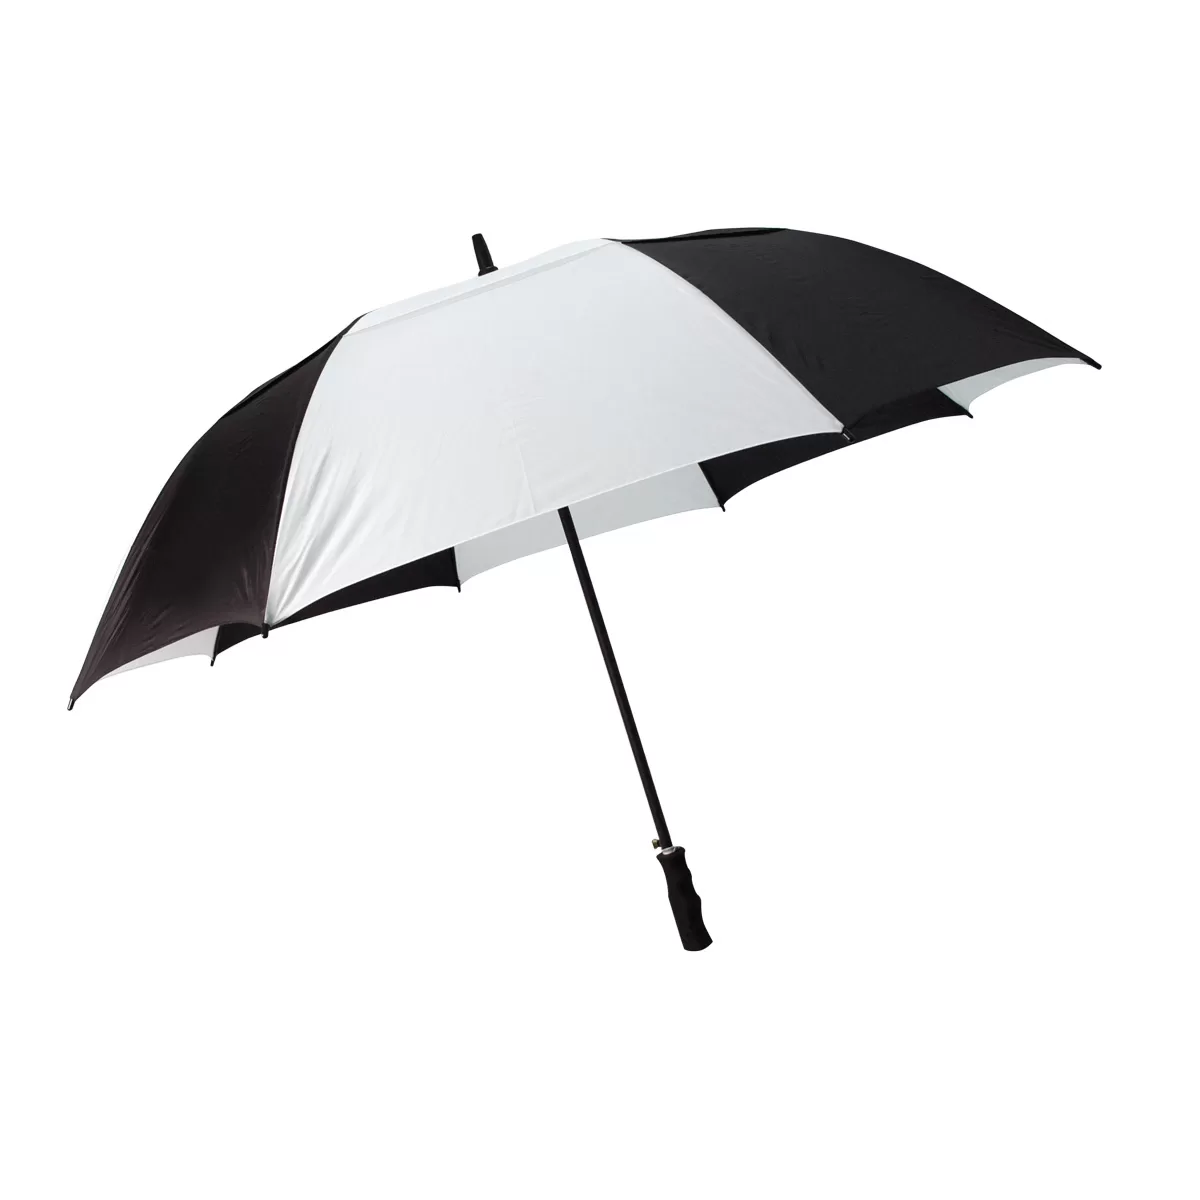 blk-white golf umbrella